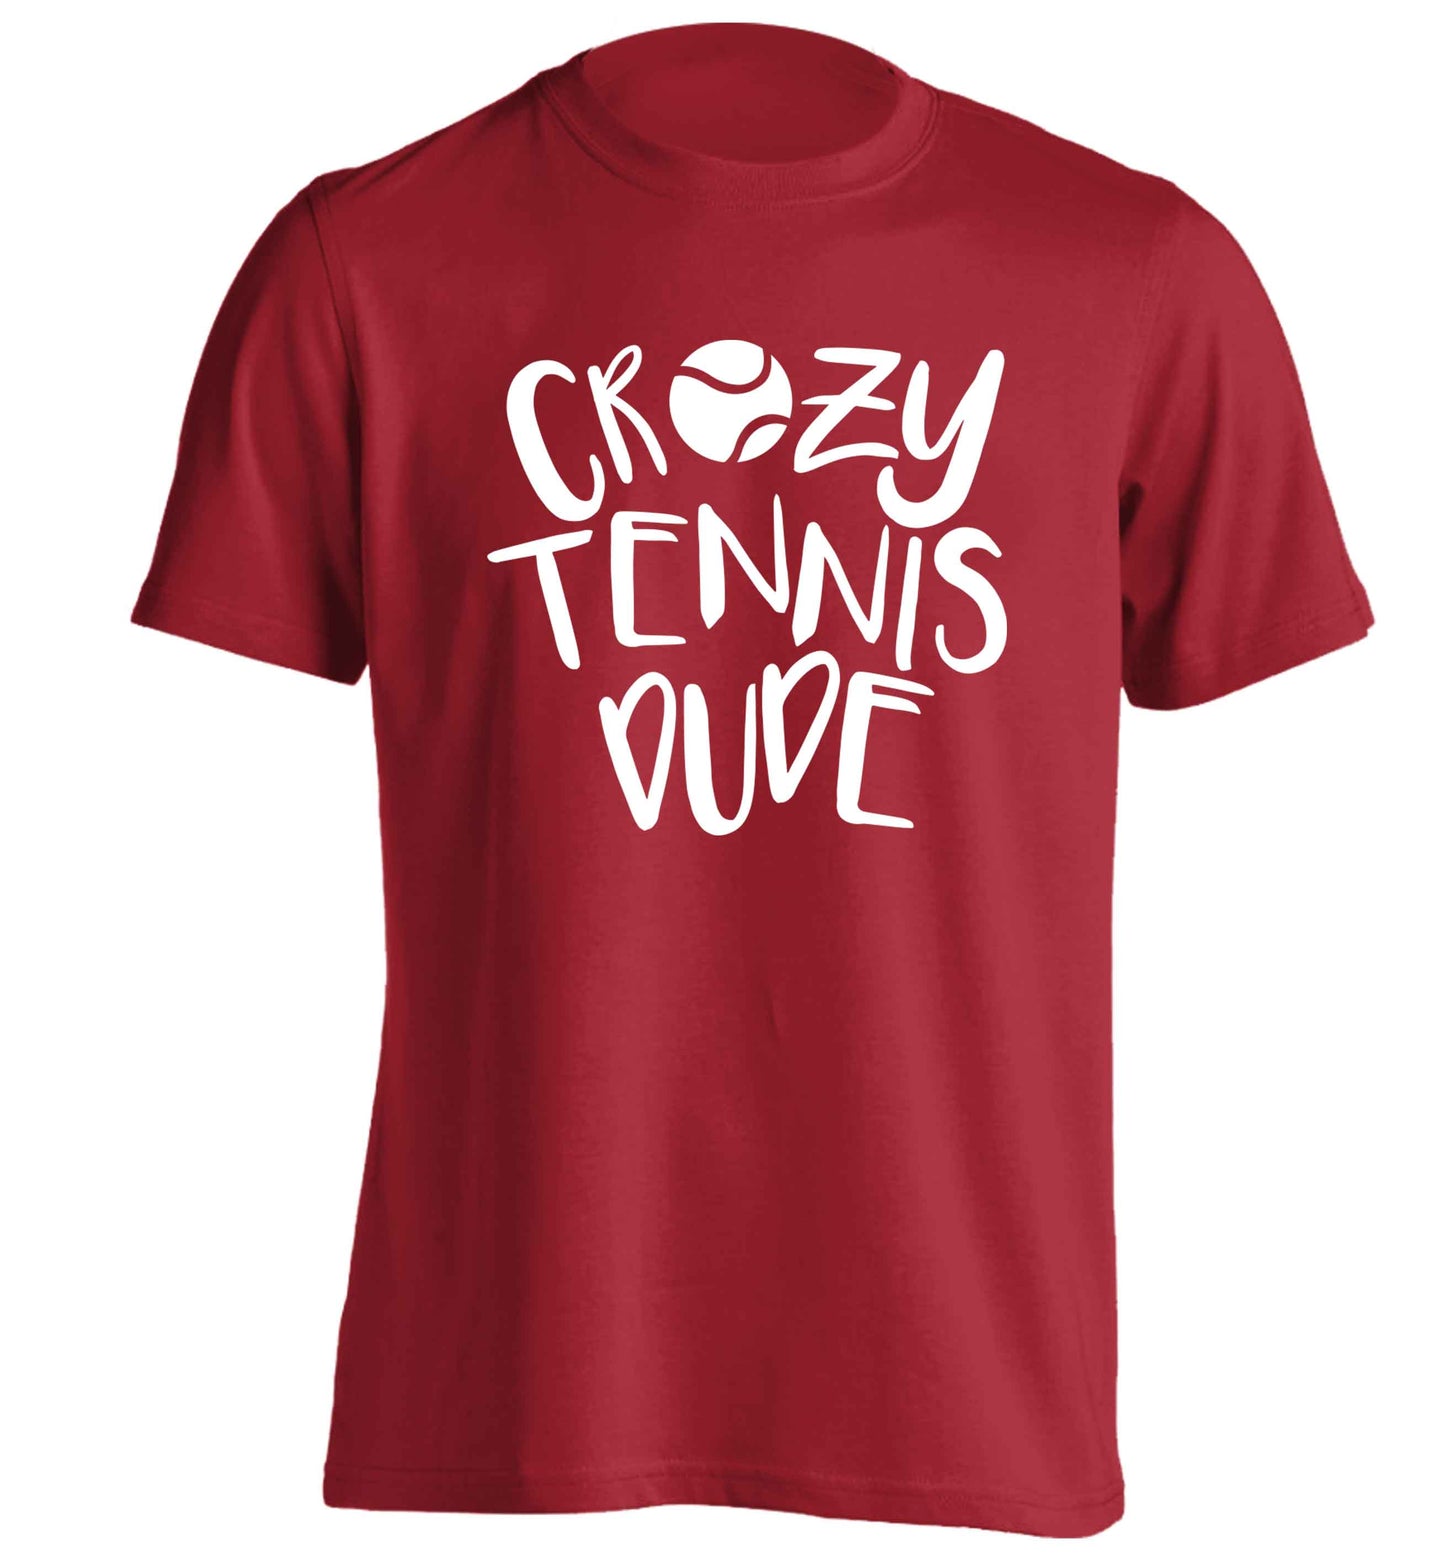 Crazy tennis dude adults unisex red Tshirt 2XL